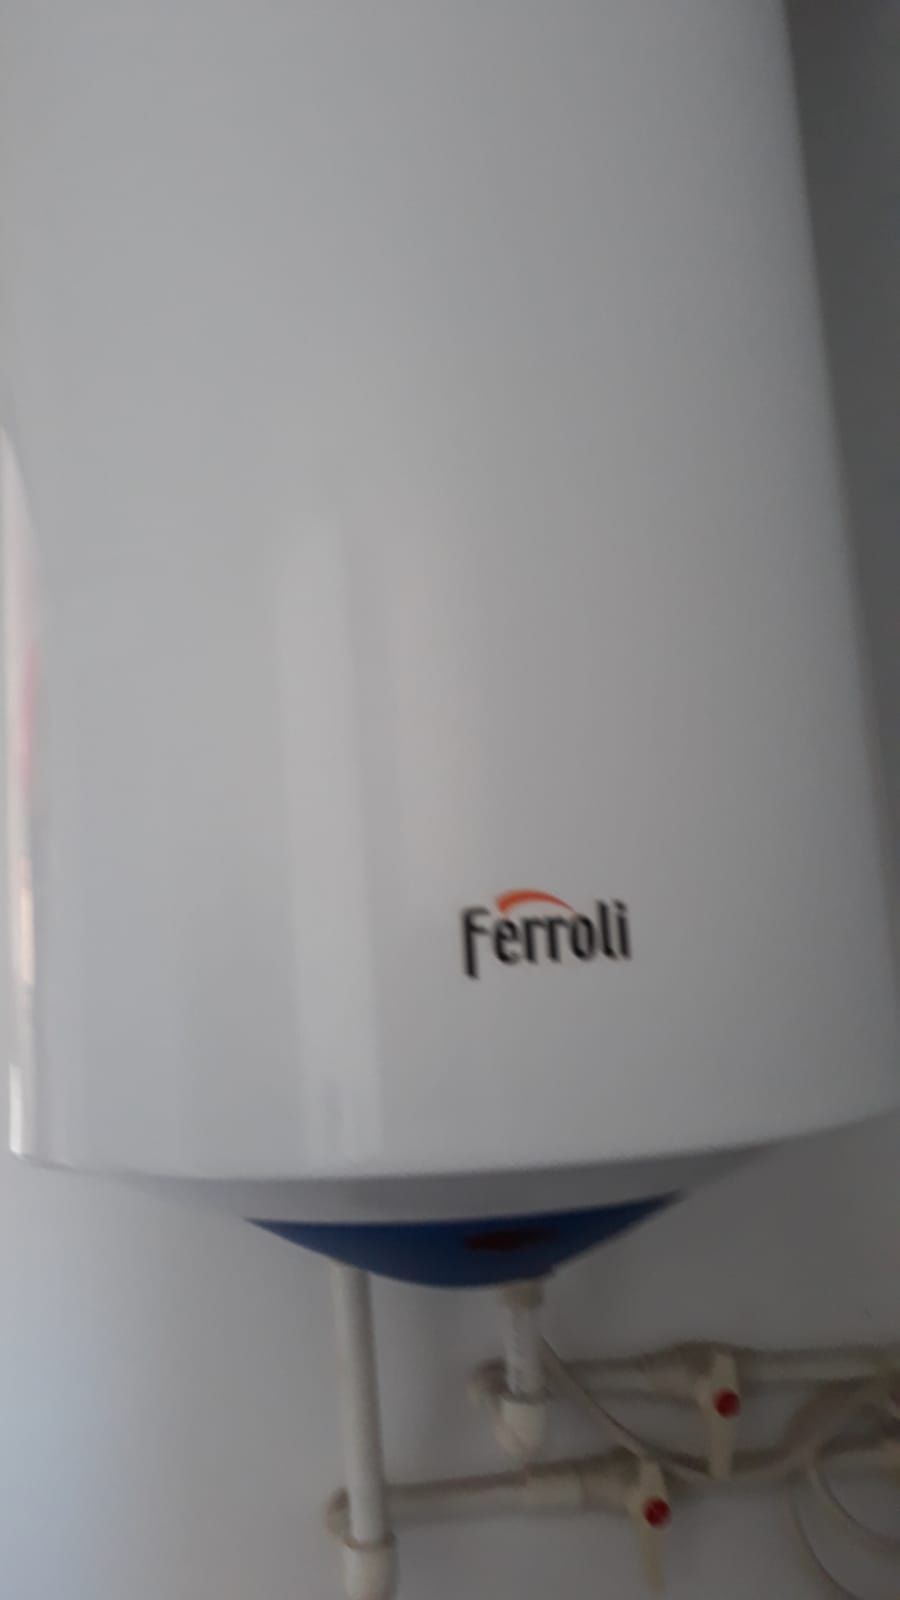 Vând boiler electric ferrolili